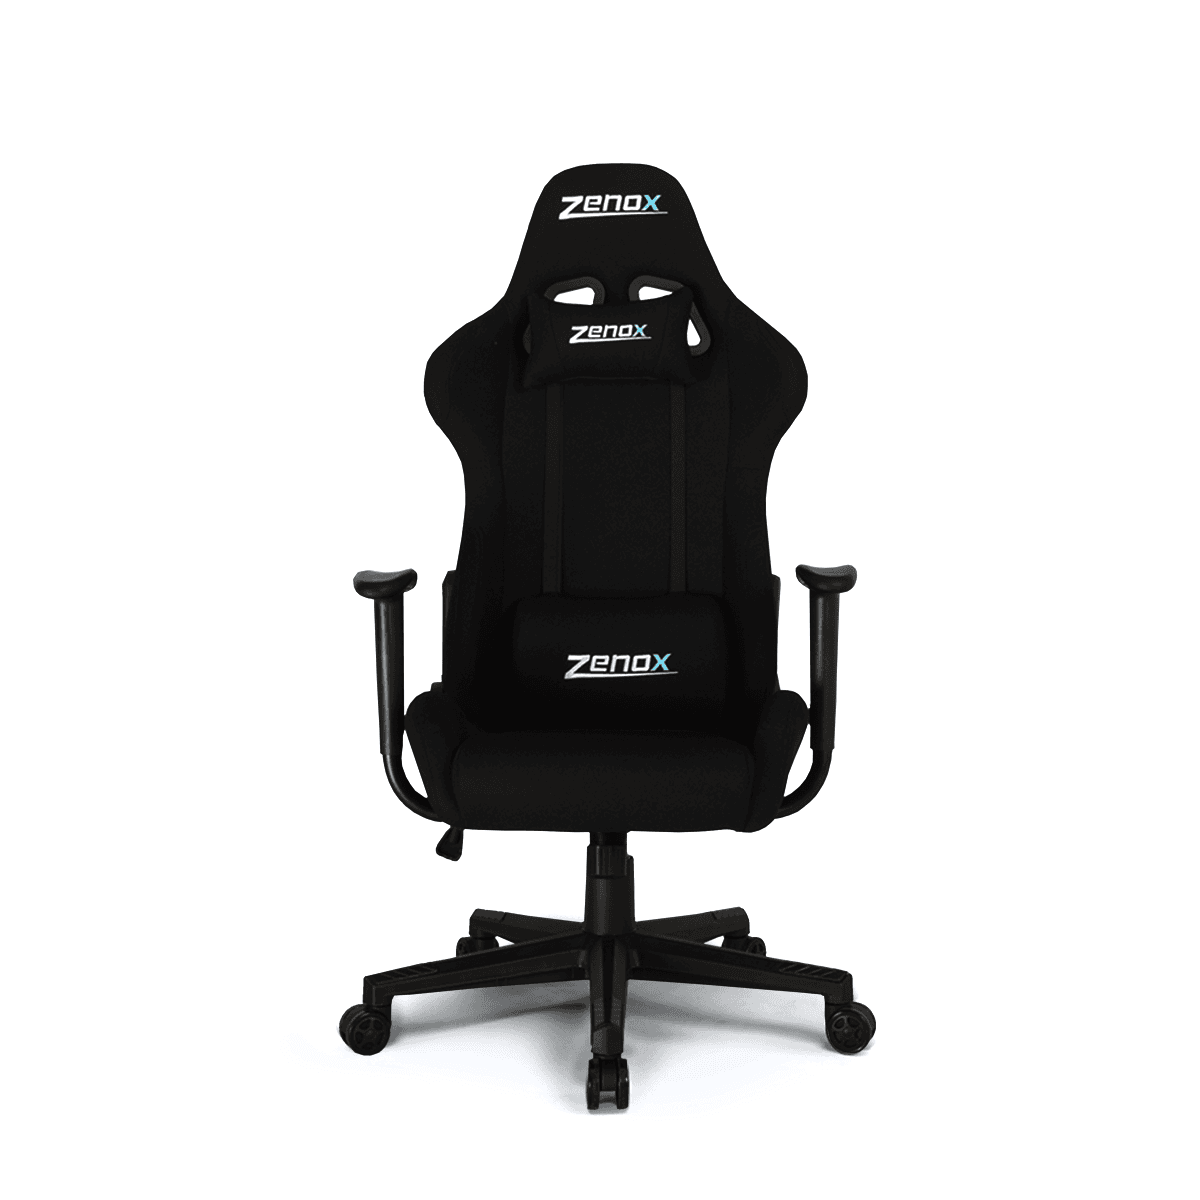 ZENOX Pluto Racing Chair (Black)